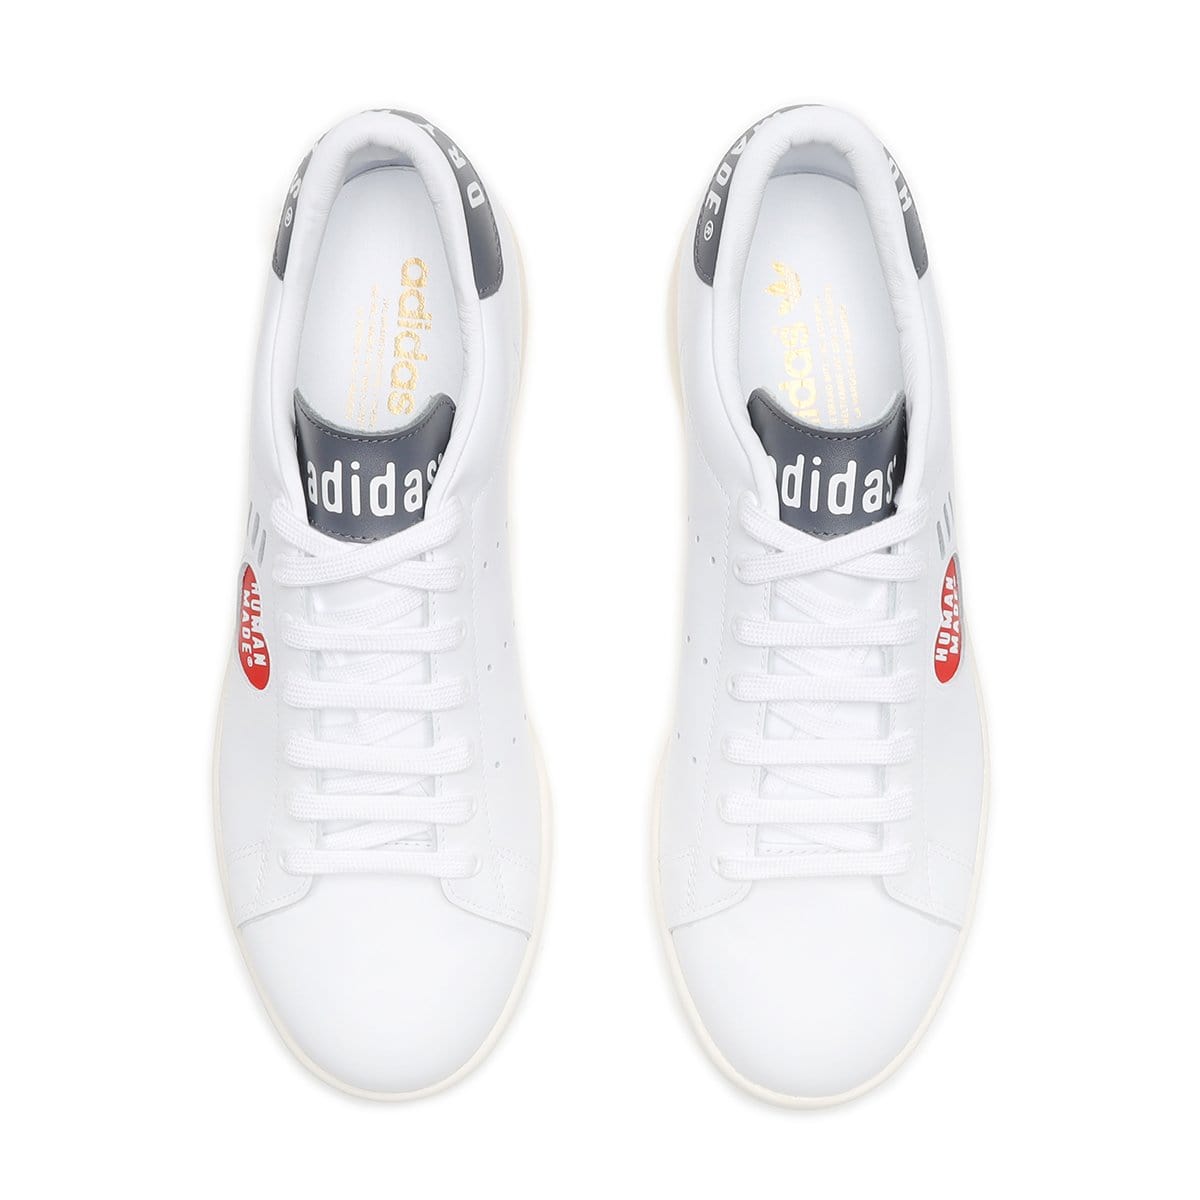 adidas Originals x Human Made Stan Smith Shoes - White/Onyx